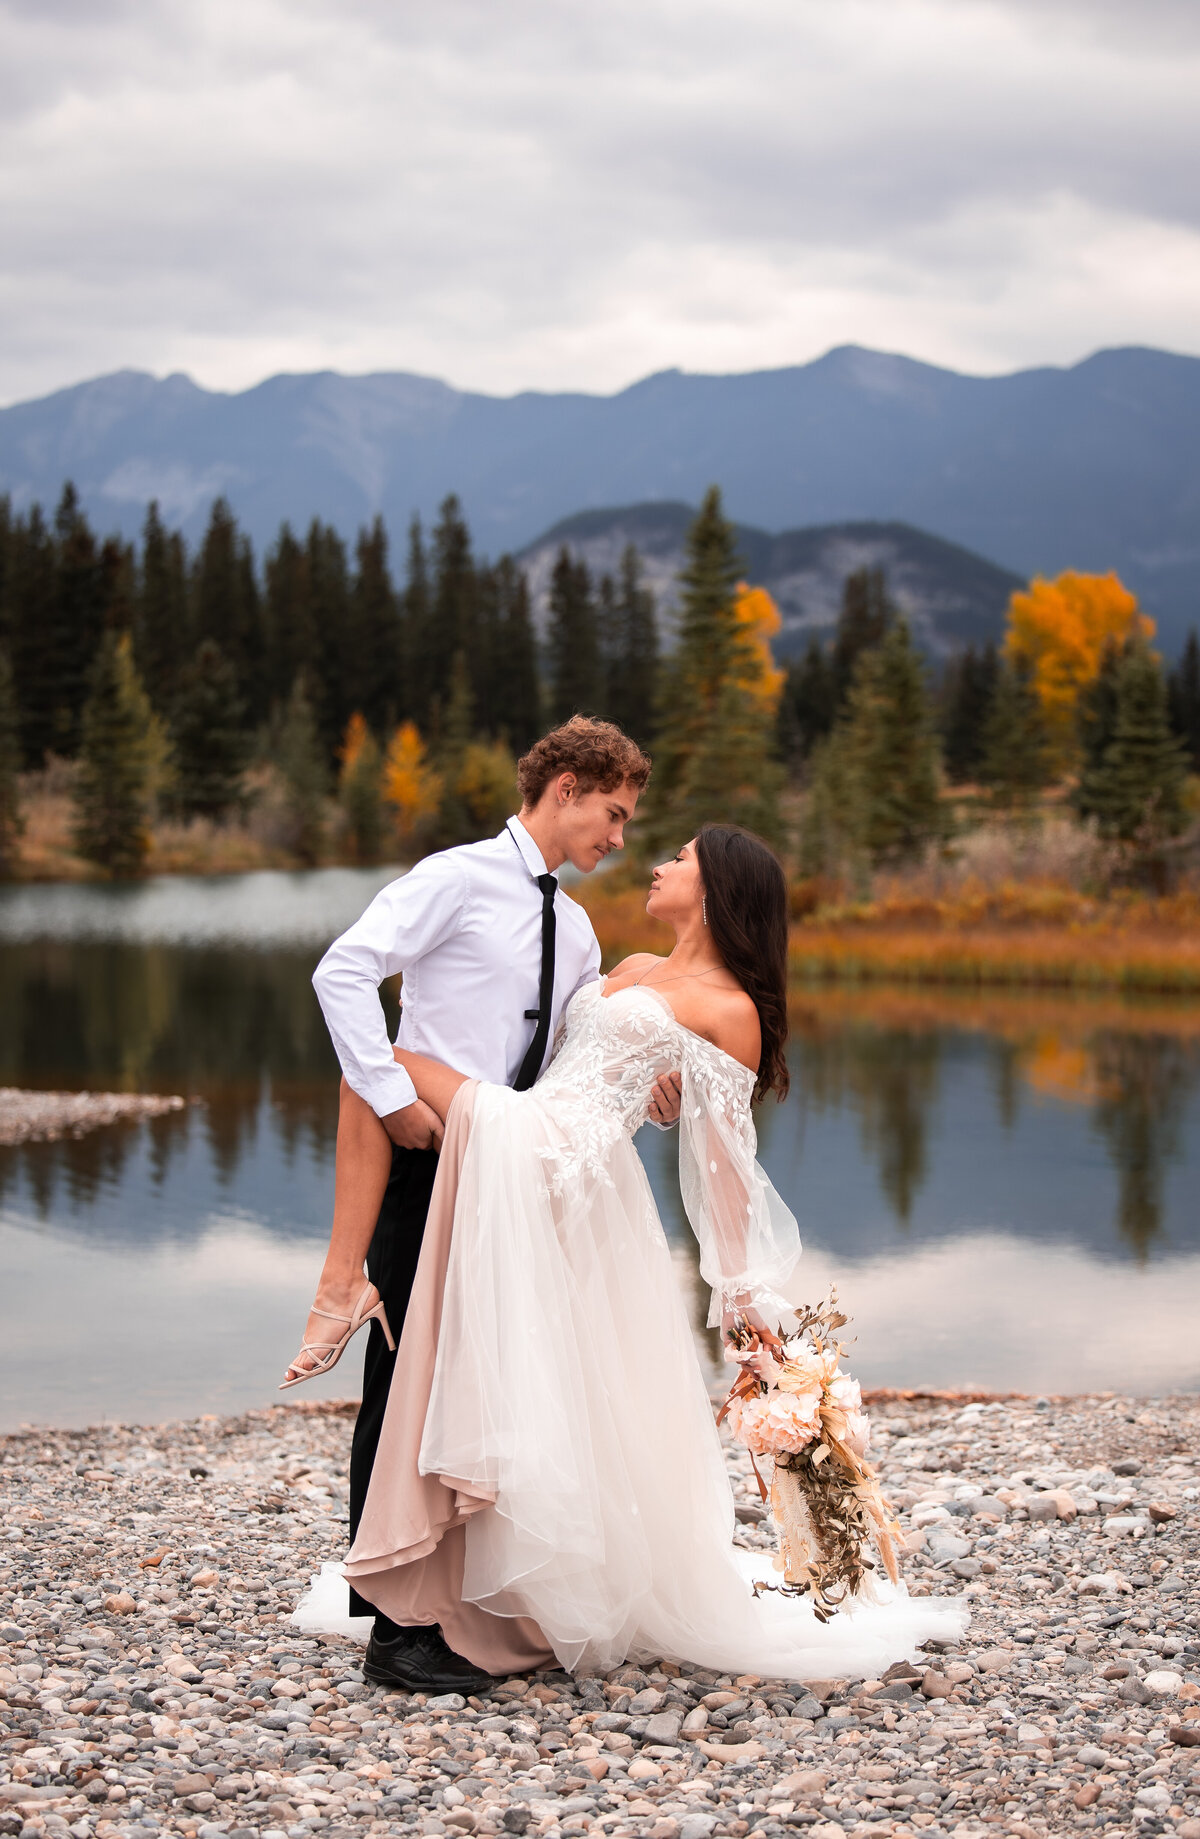 Couple on their wedding day in the Mountains of Yukon